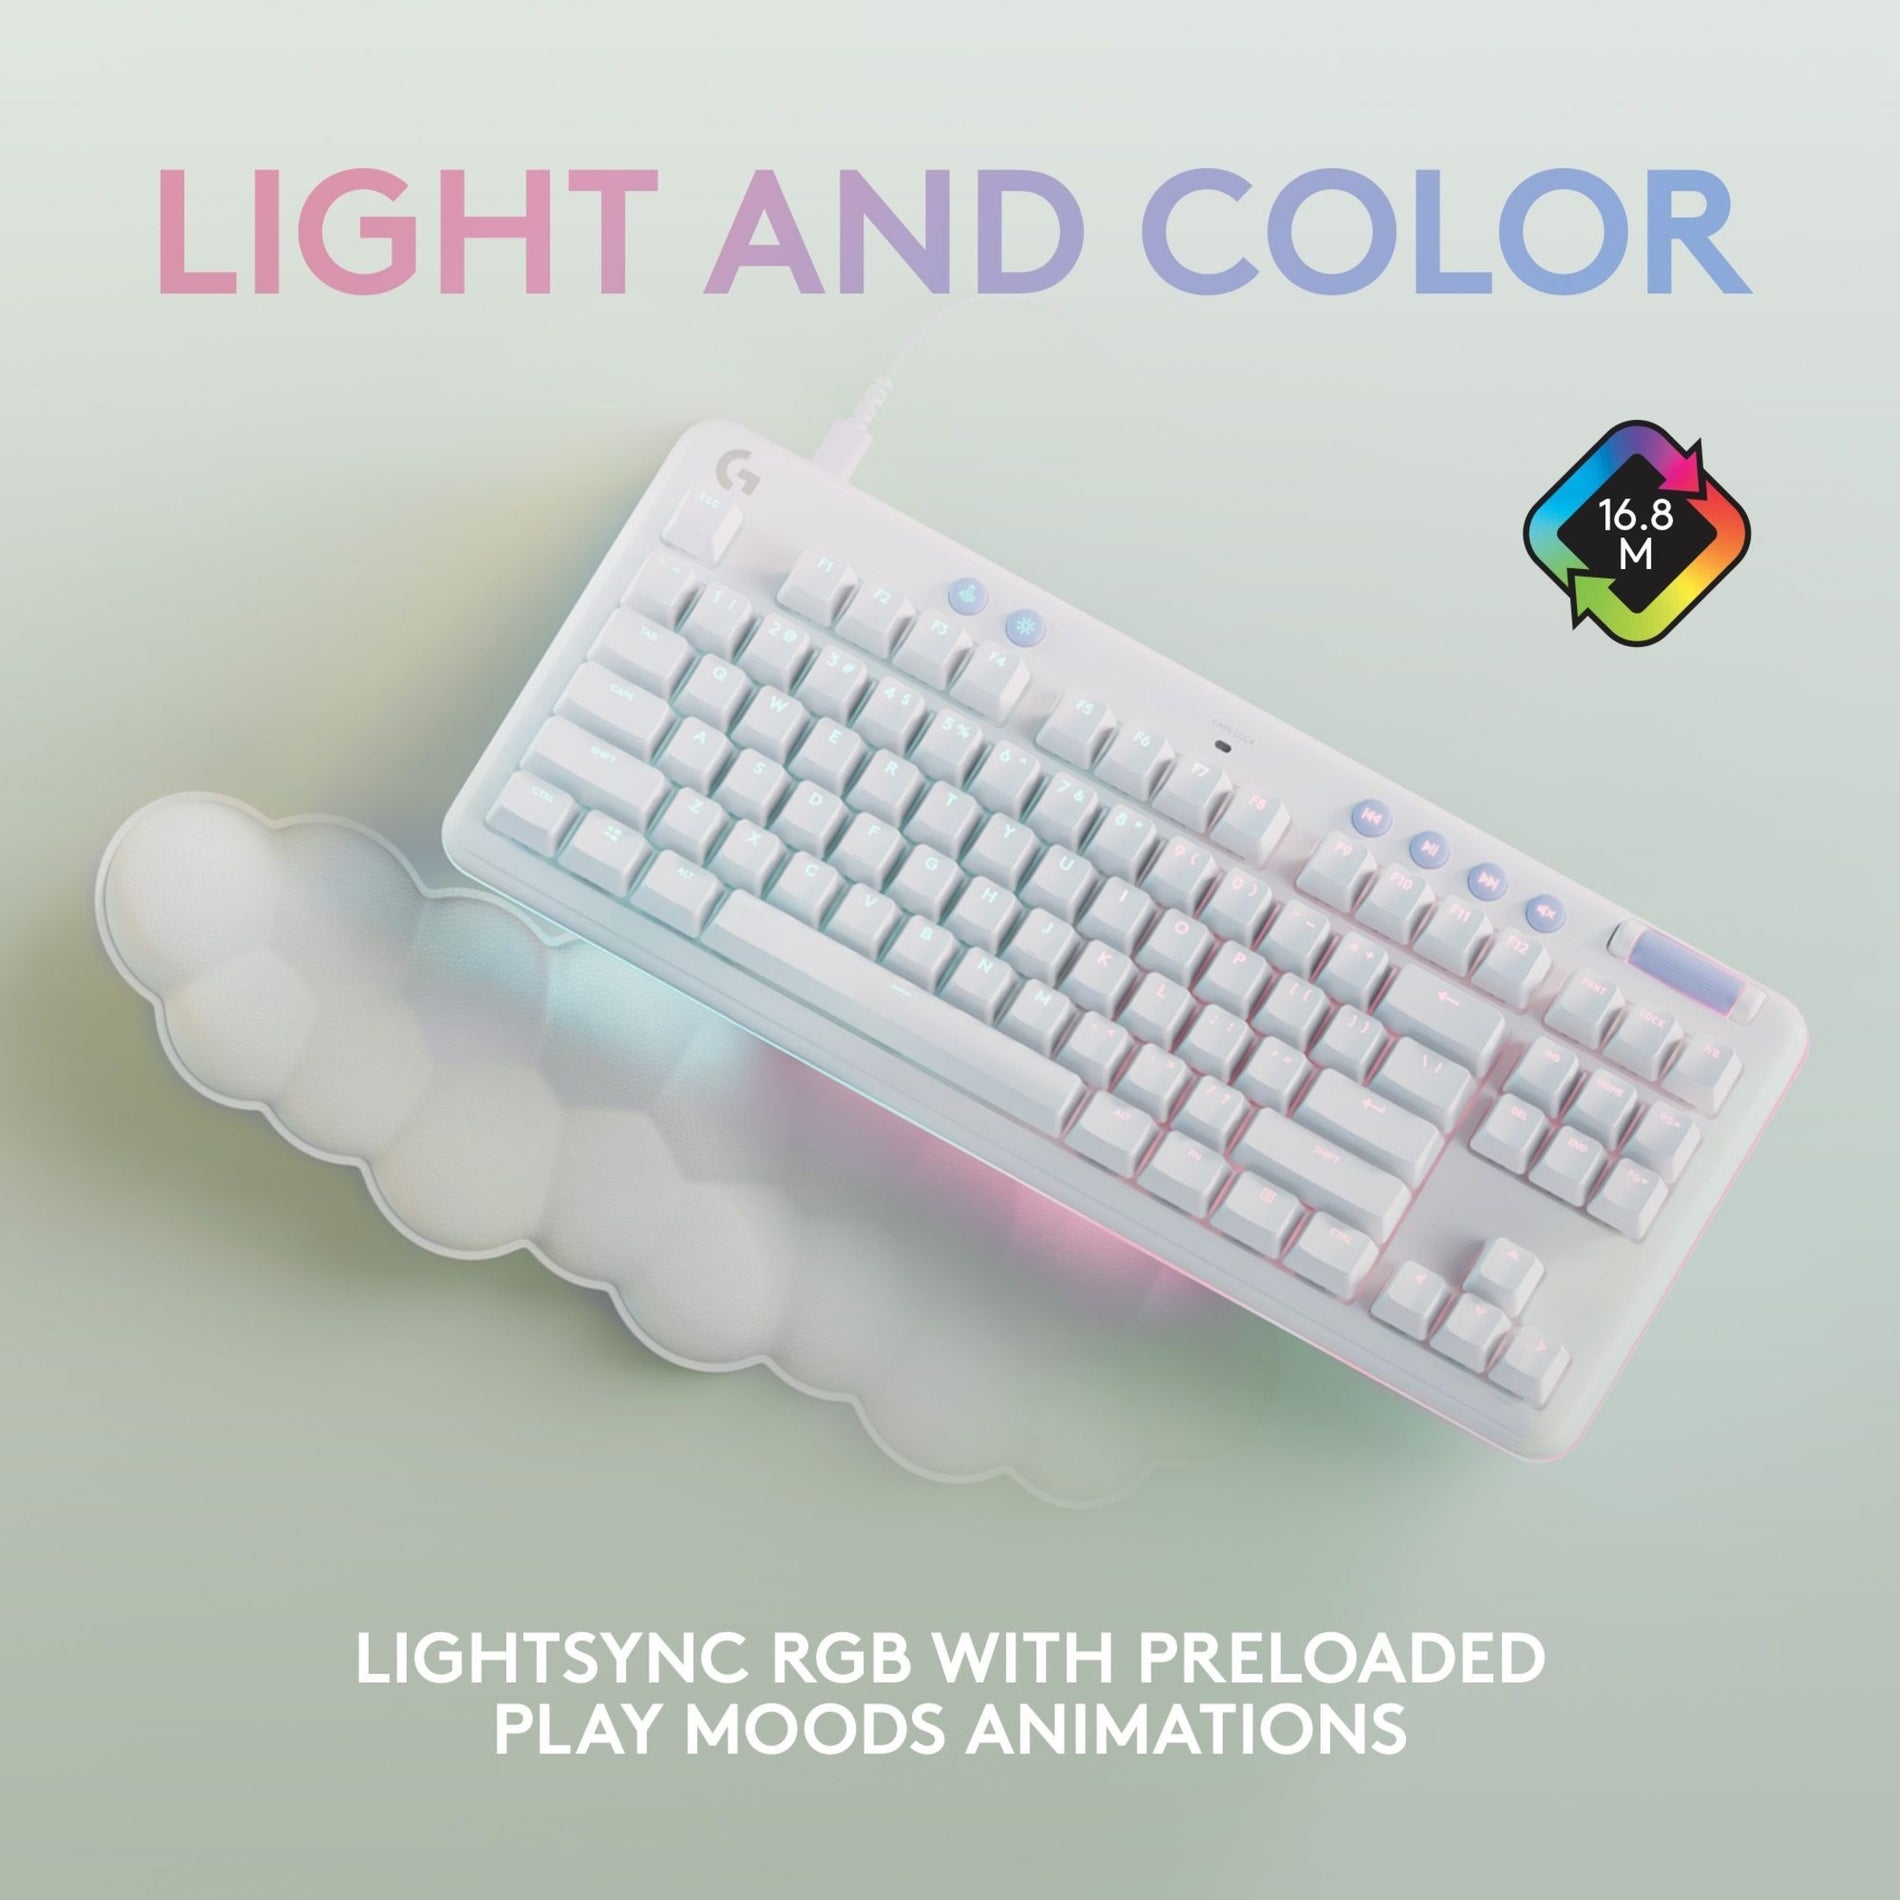 Logitech 920-010413 G713 Gaming Keyboard, RGB LED Backlight, Adjustable Height, Low-profile Keys